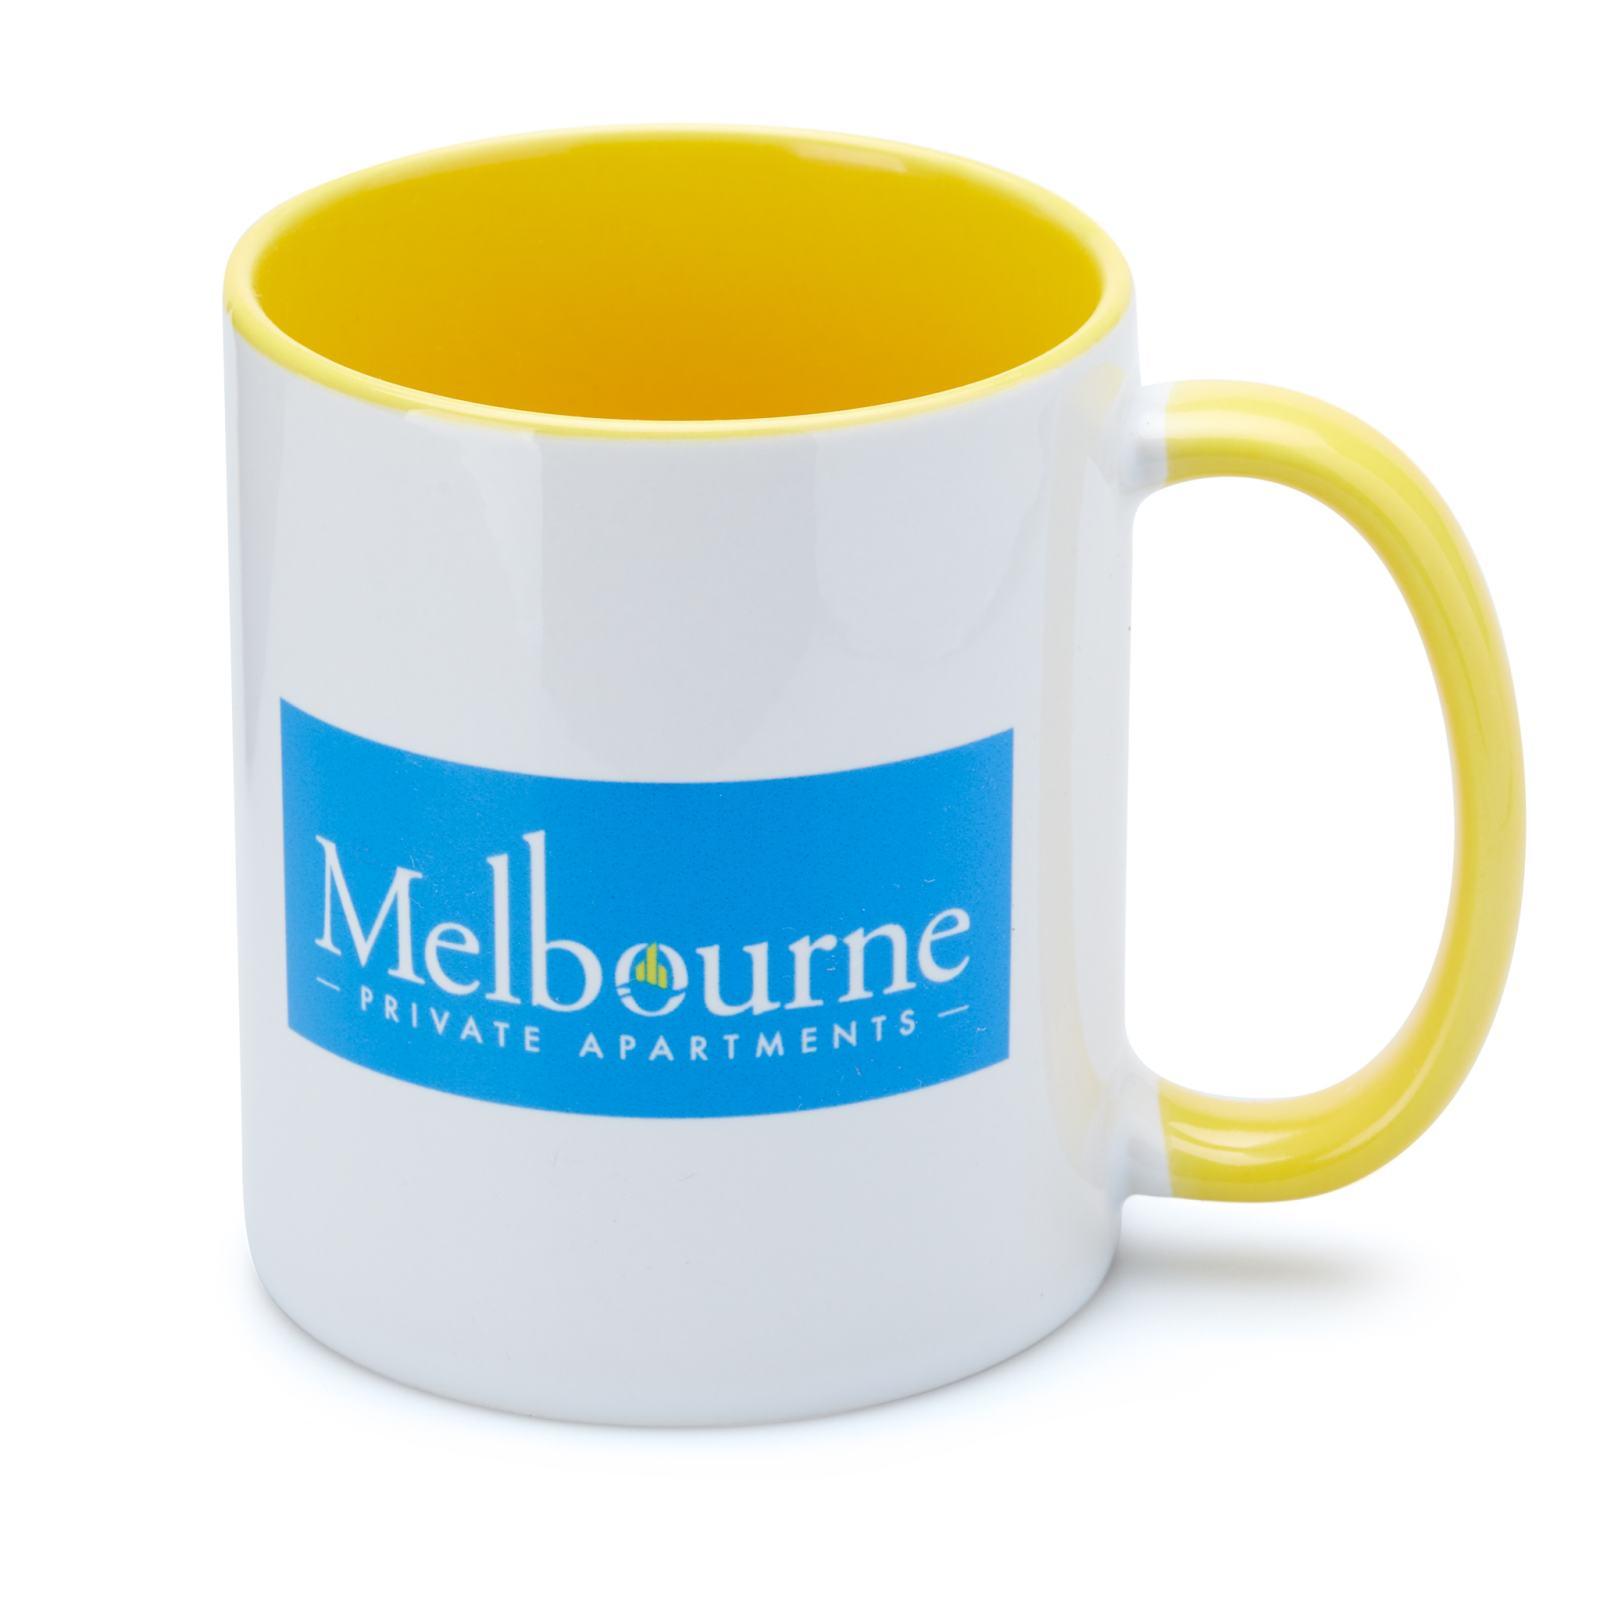 Melbourne Private Apartments Mug